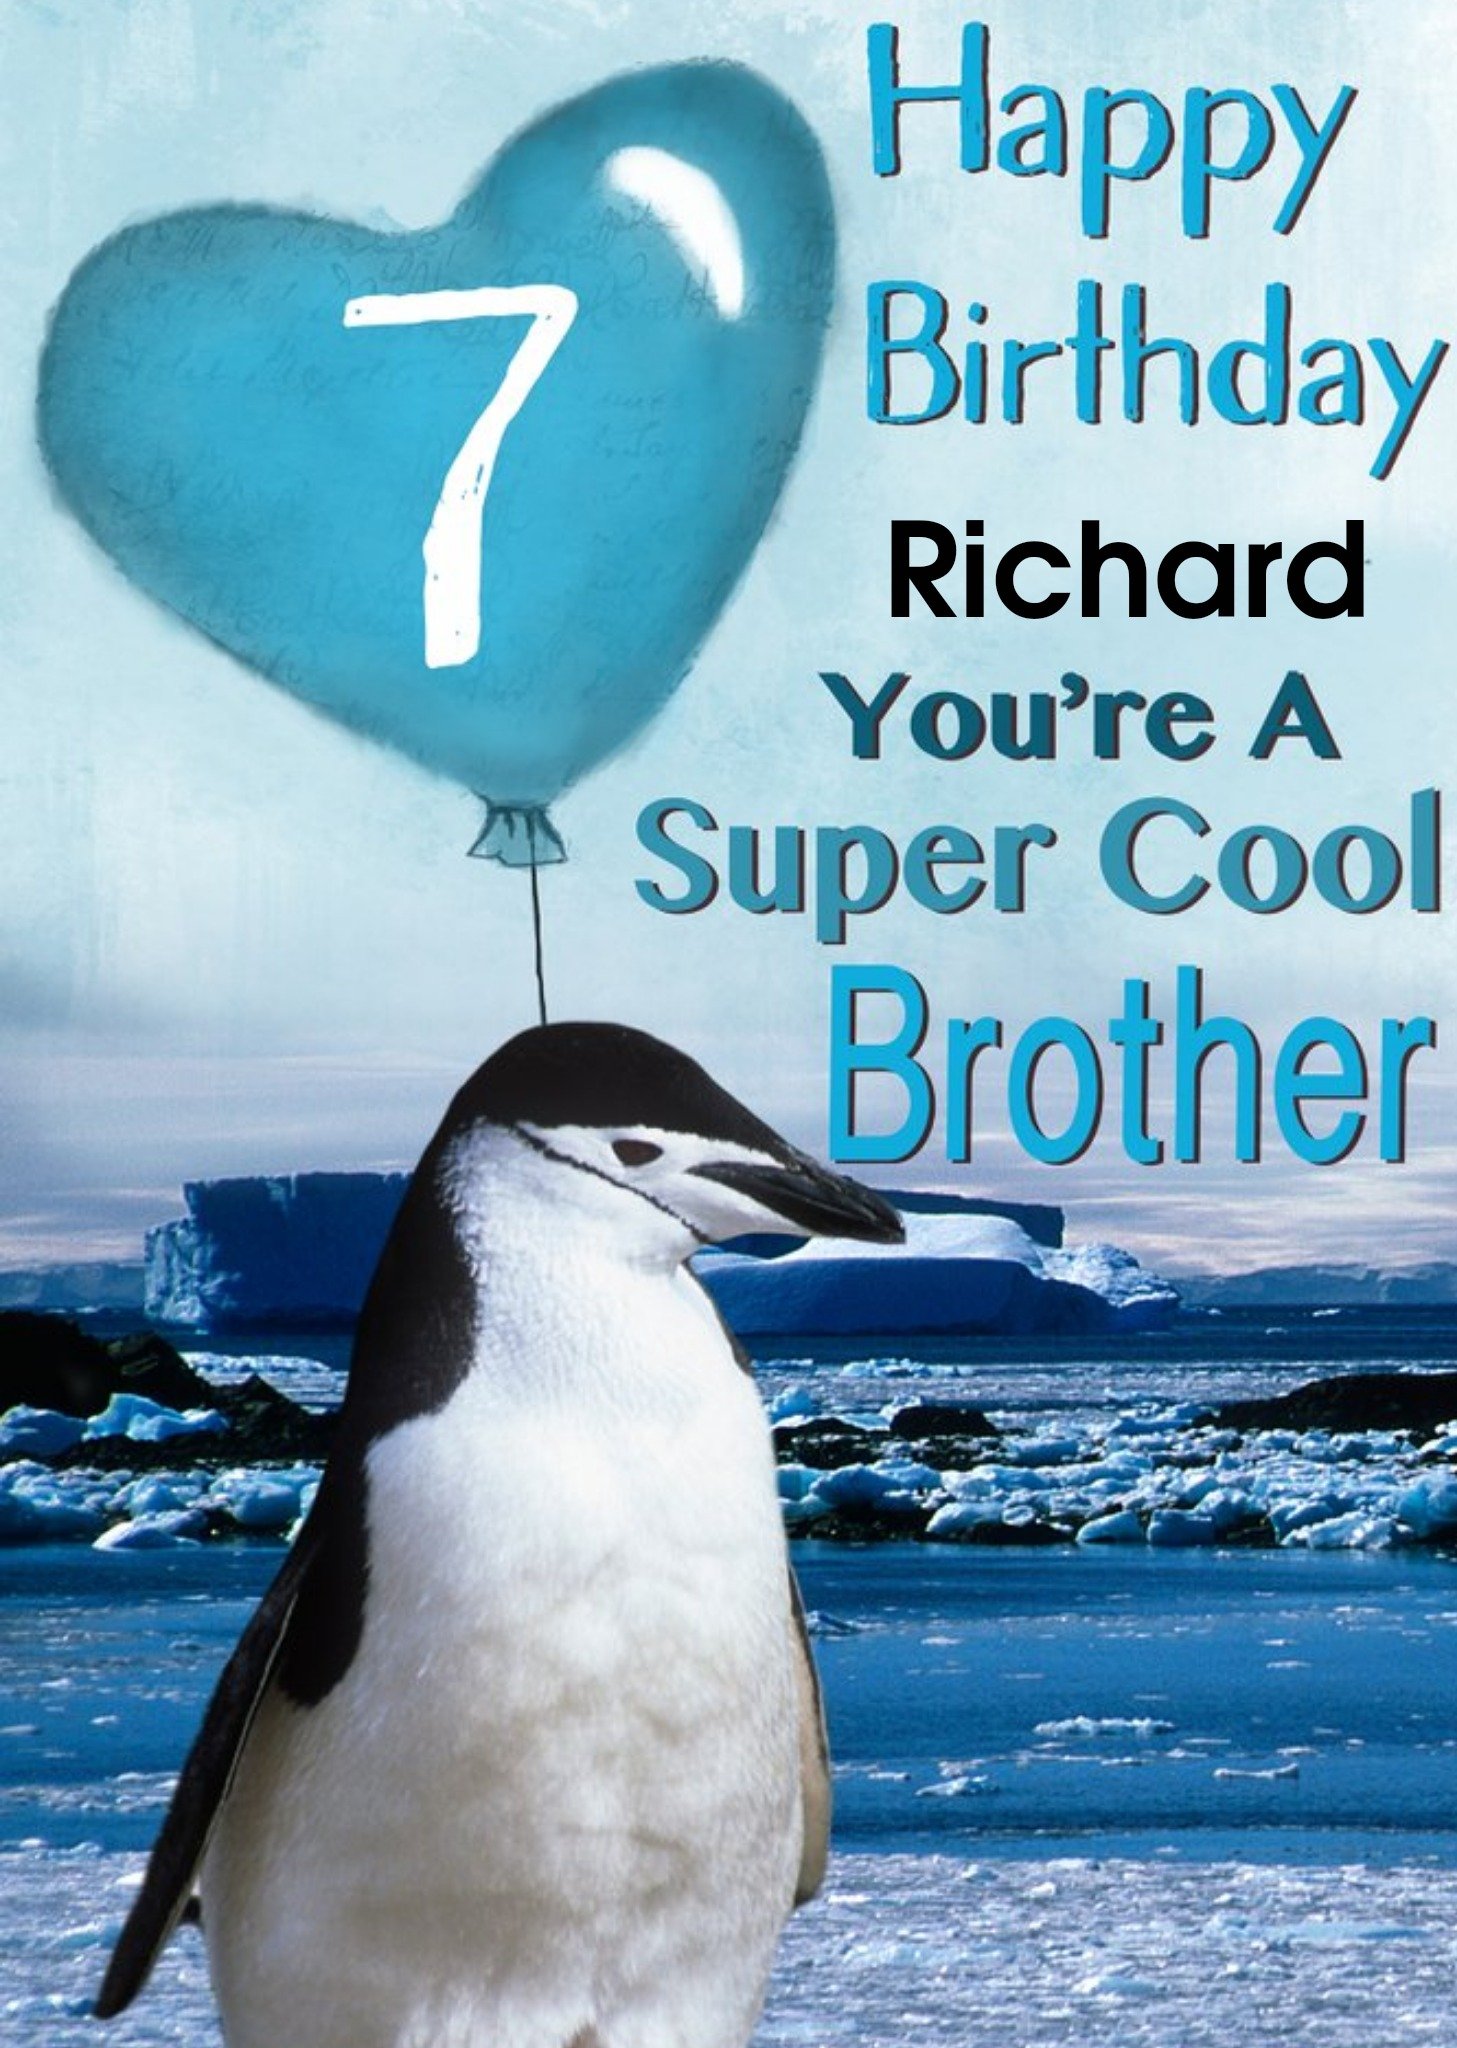 Moonpig Photo Of Penguin With Birthday Balloon Brother 7th Birthday Card Ecard